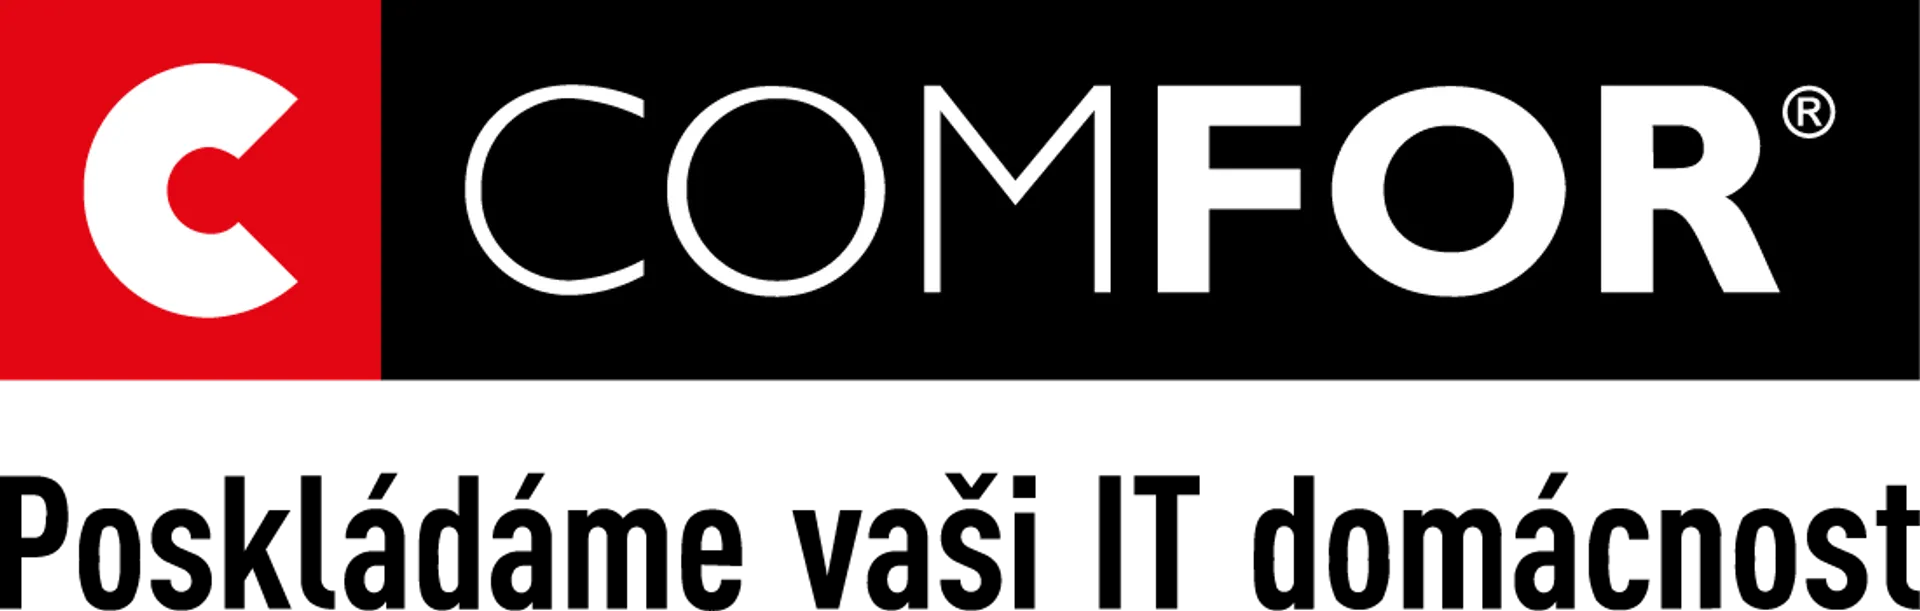 COMFOR logo